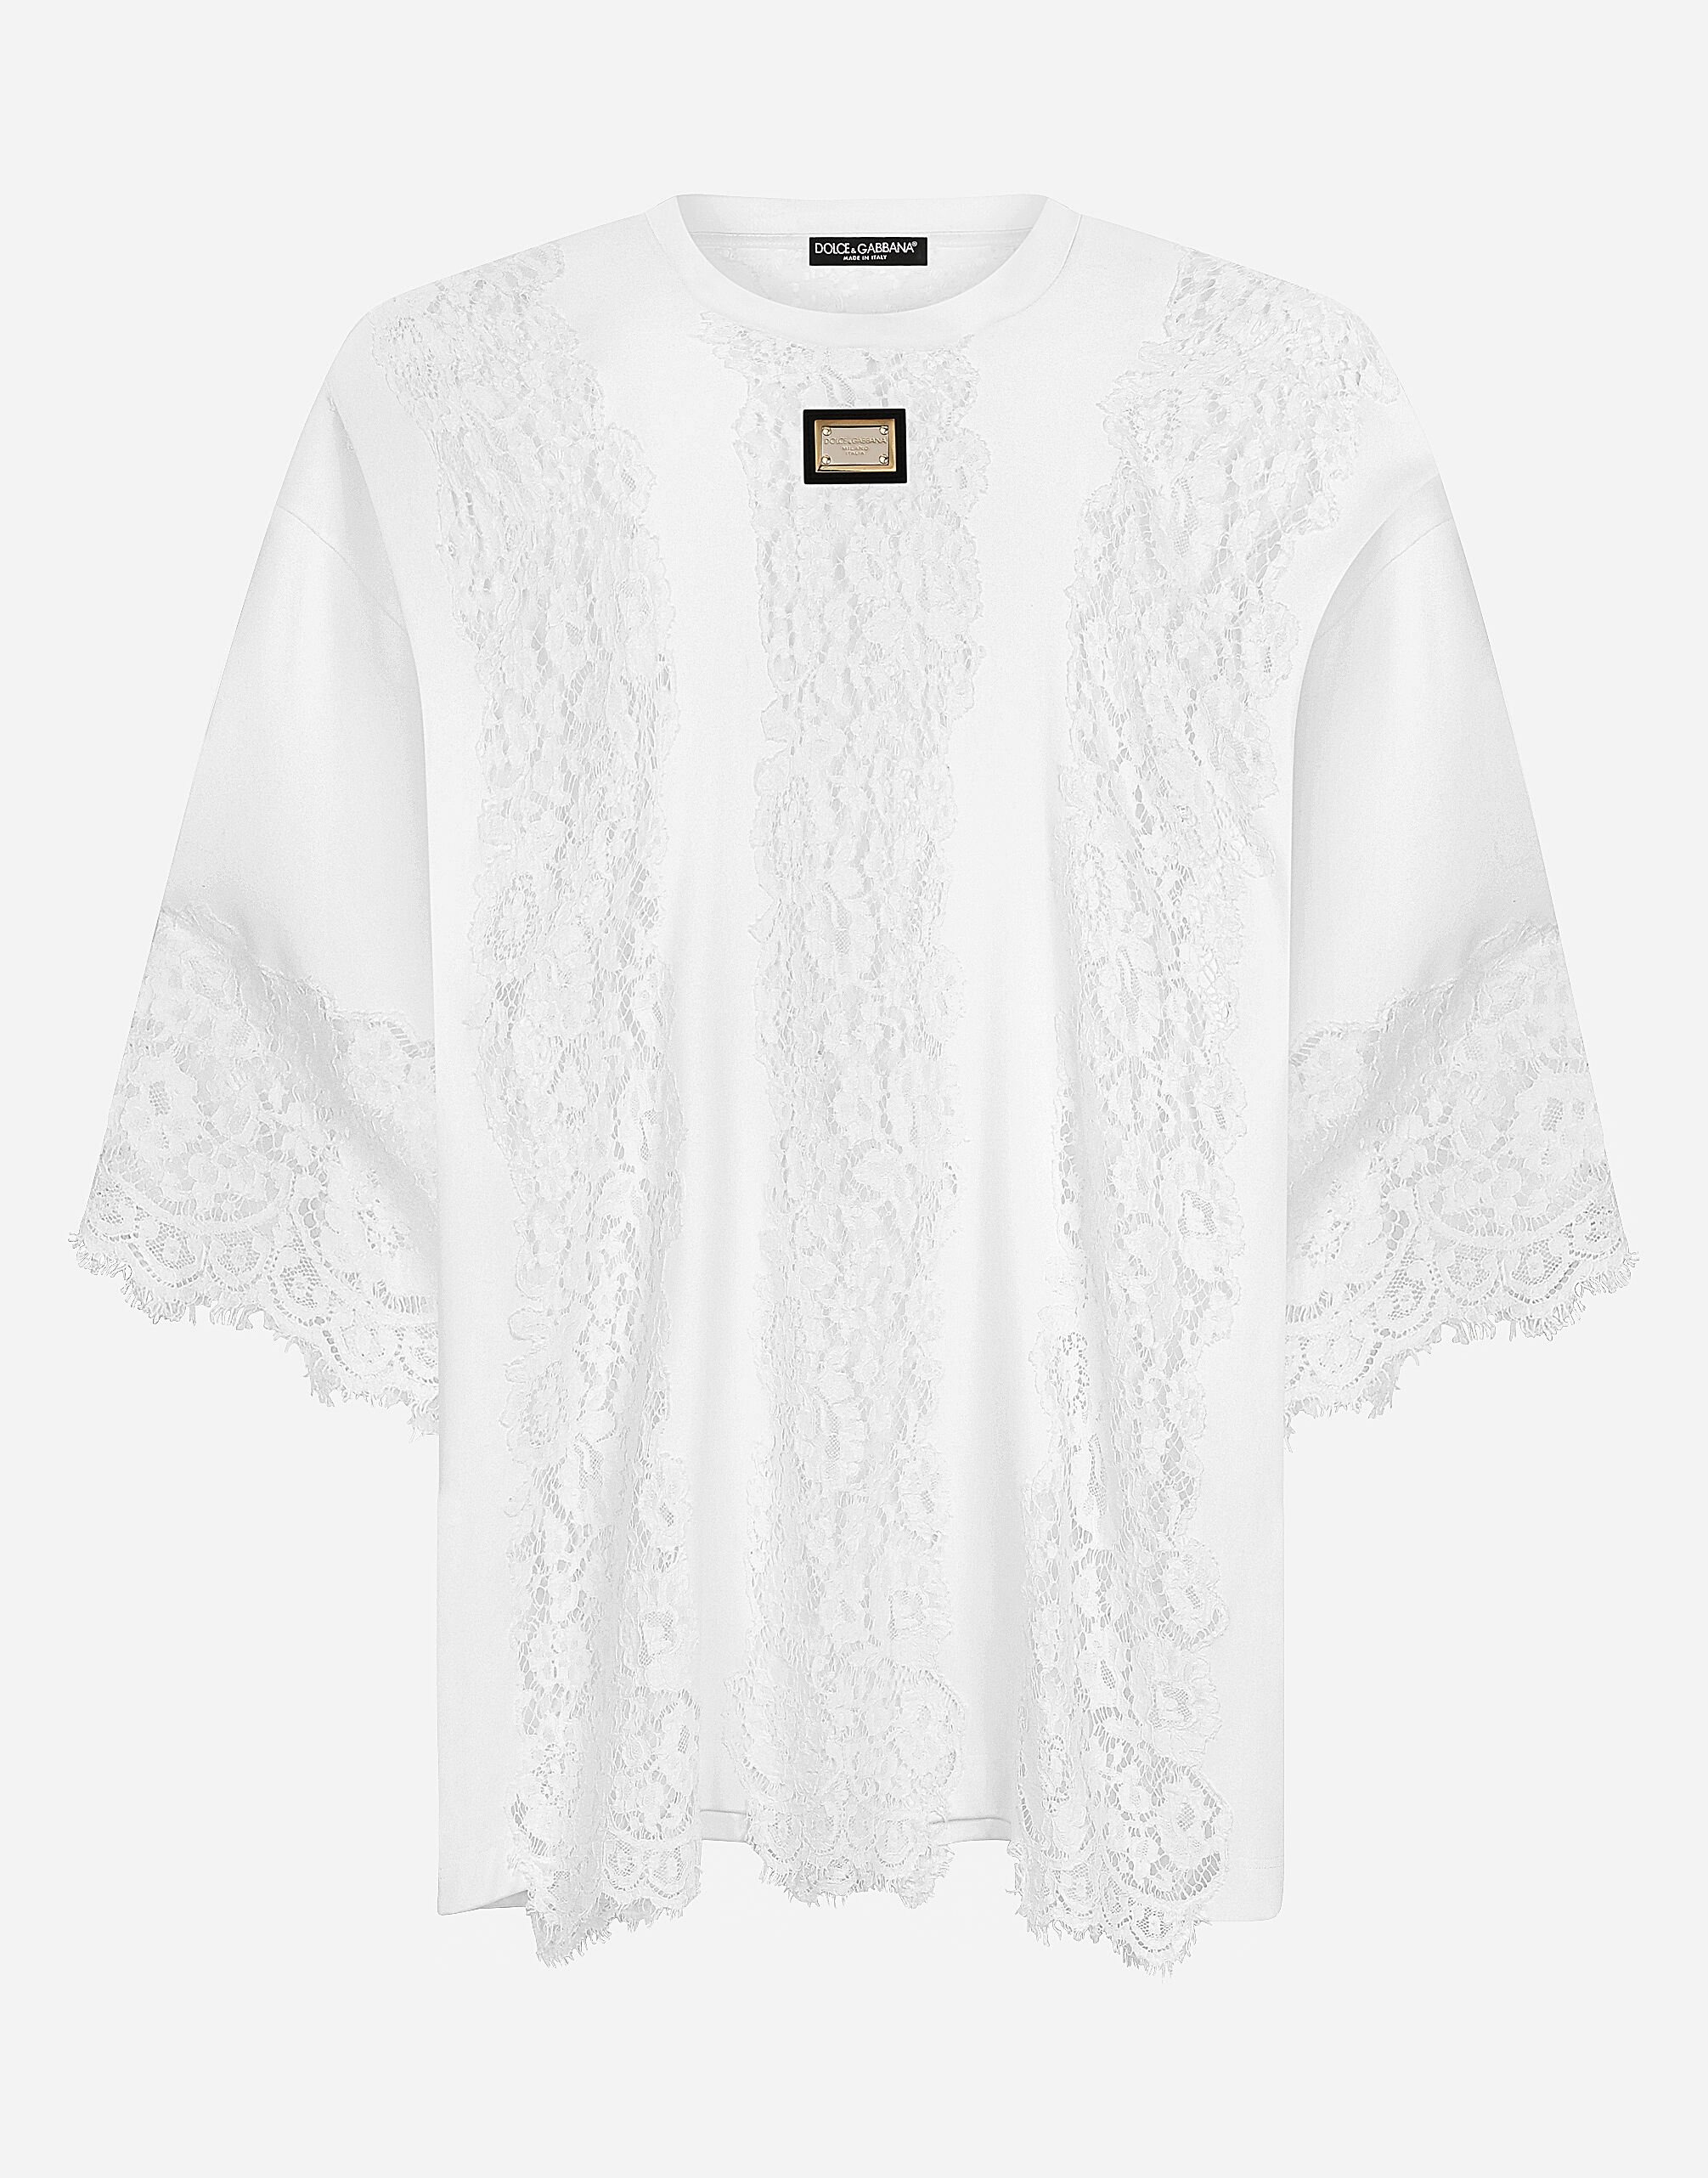 Dolce&Gabbana Short-sleeved T-shirt with lace inserts Black G8RF1TFLSIM